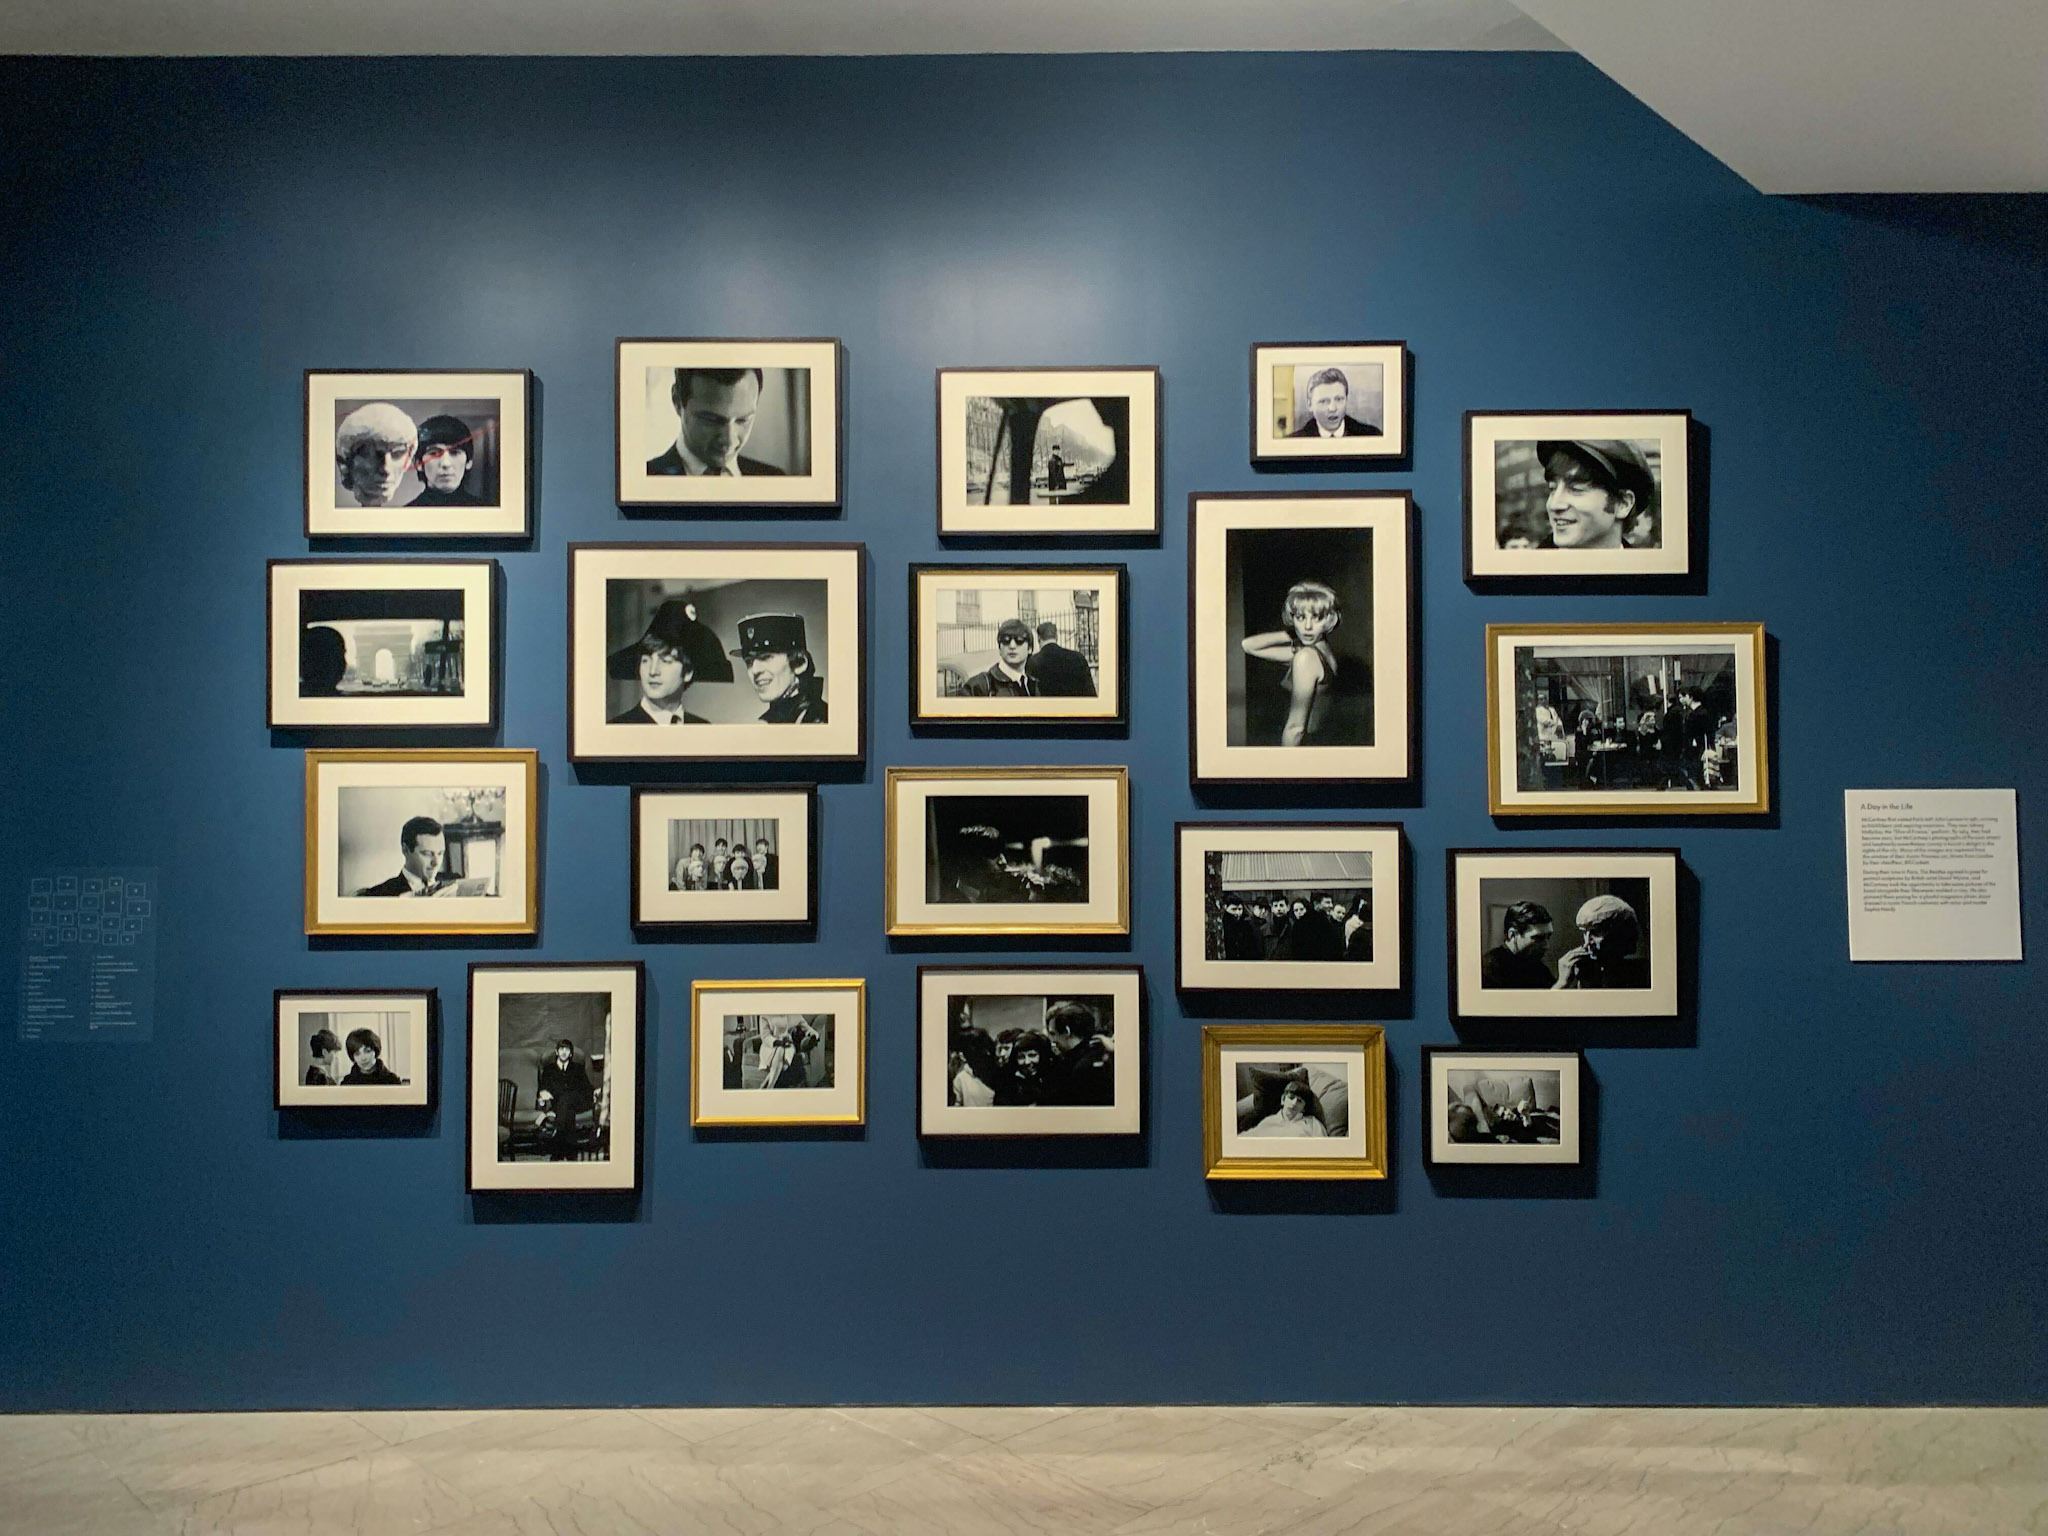 Brooklyn Museum’s Paul McCartney photography exhibit